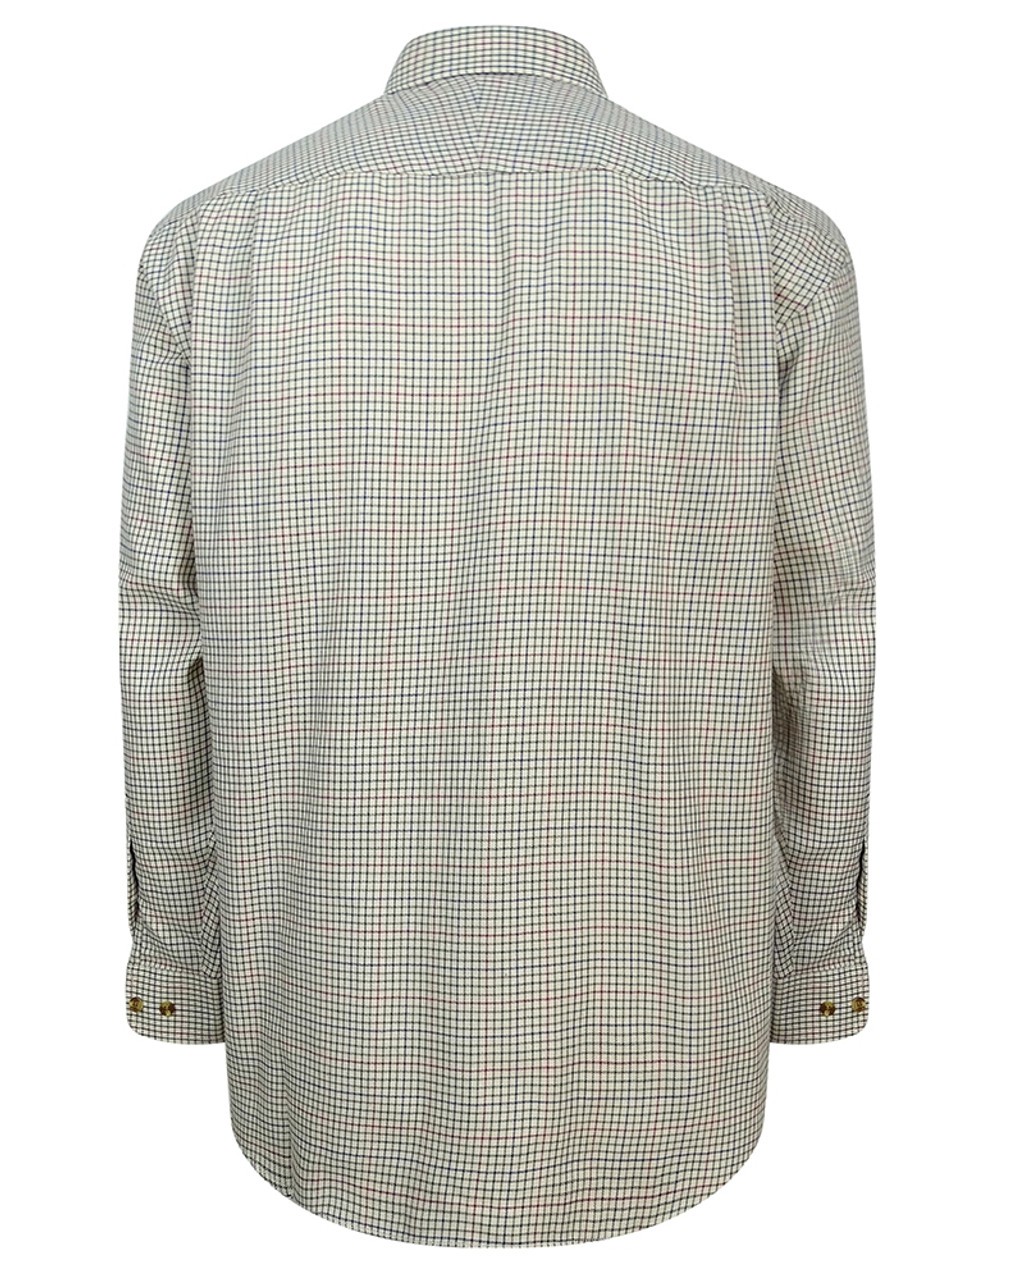 Hoggs of Fife Skye Cotton Check Shirt | Mens Cotton Shirts